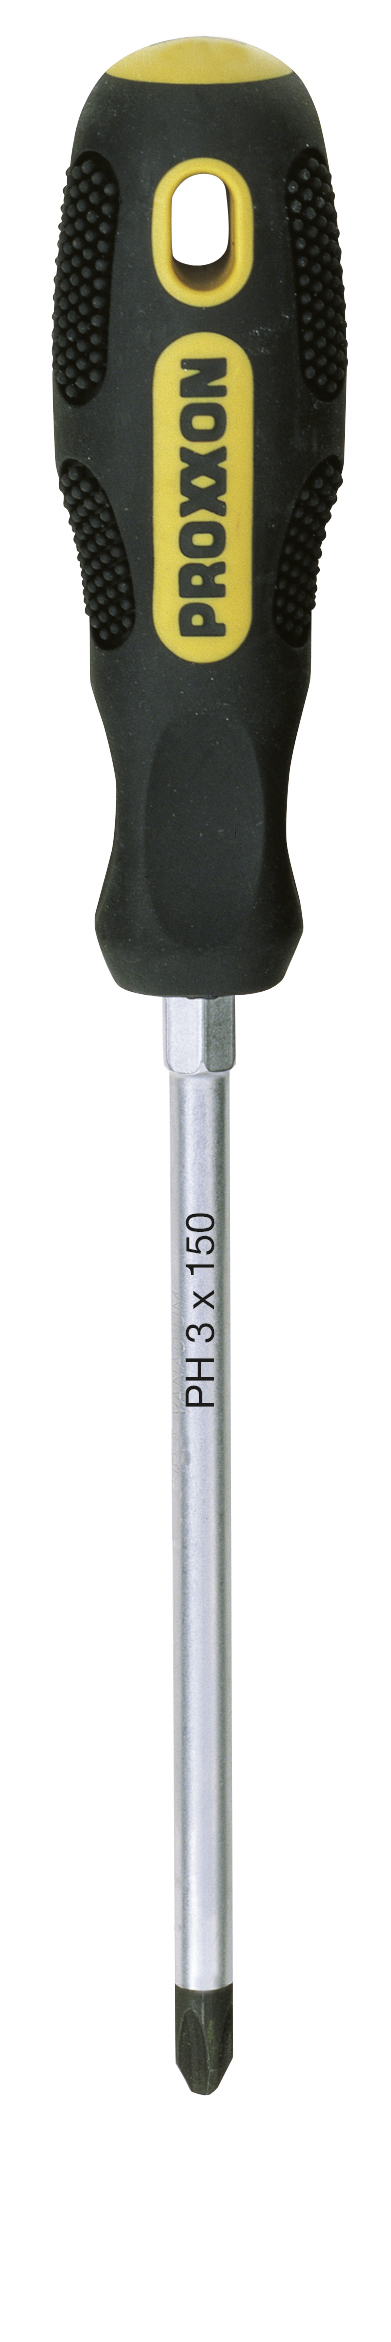 FLEX-DOT-skruetrækker krydskærv PH 3 x 150, PROXXON